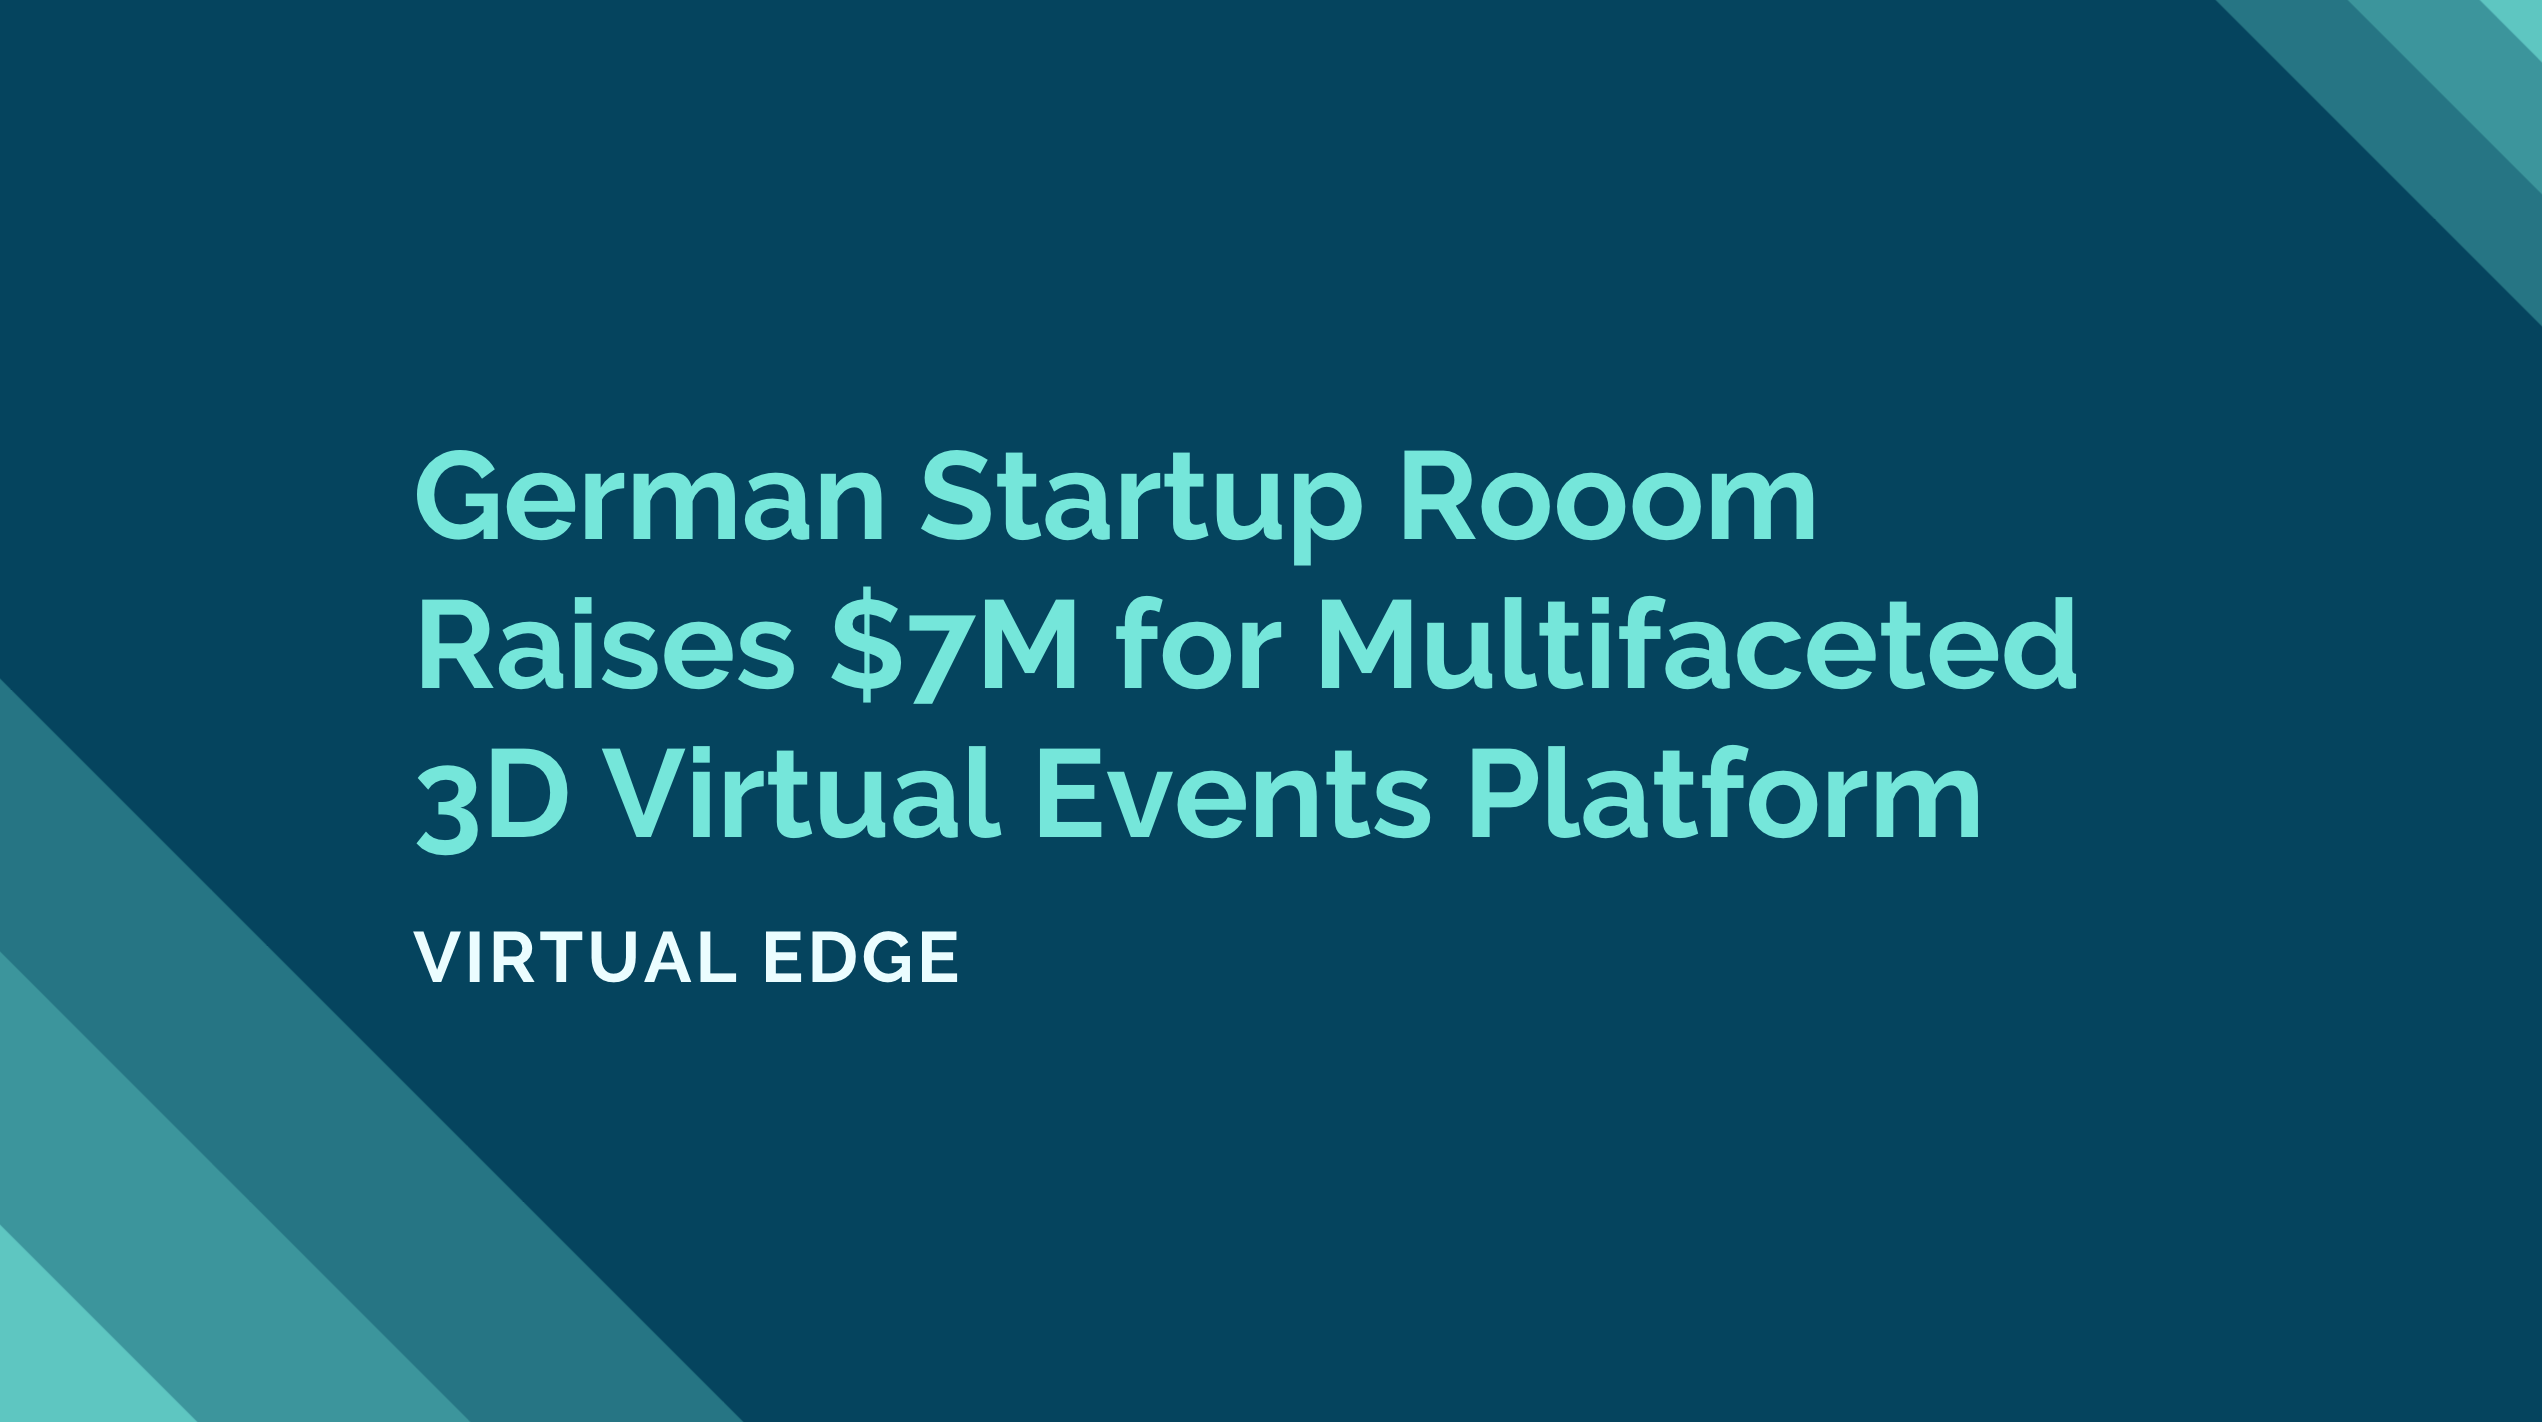 German Startup Rooom Raises $7M for Multifaceted 3D Virtual Events Platform